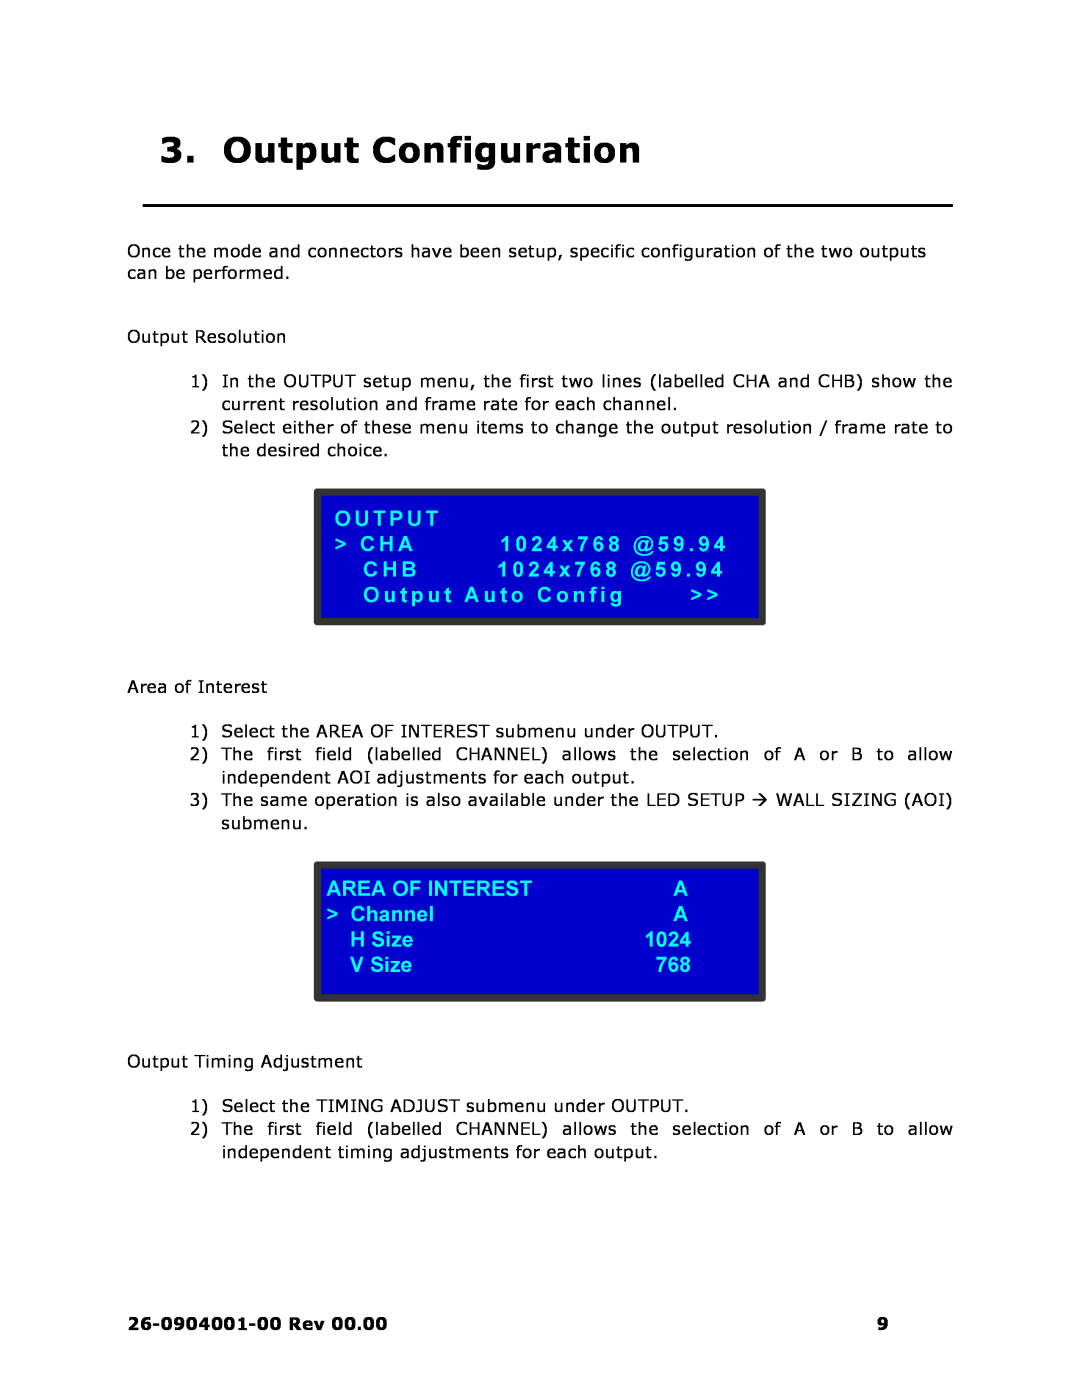 Barco II manual Output Configuration, 26-0904001-00 Rev 